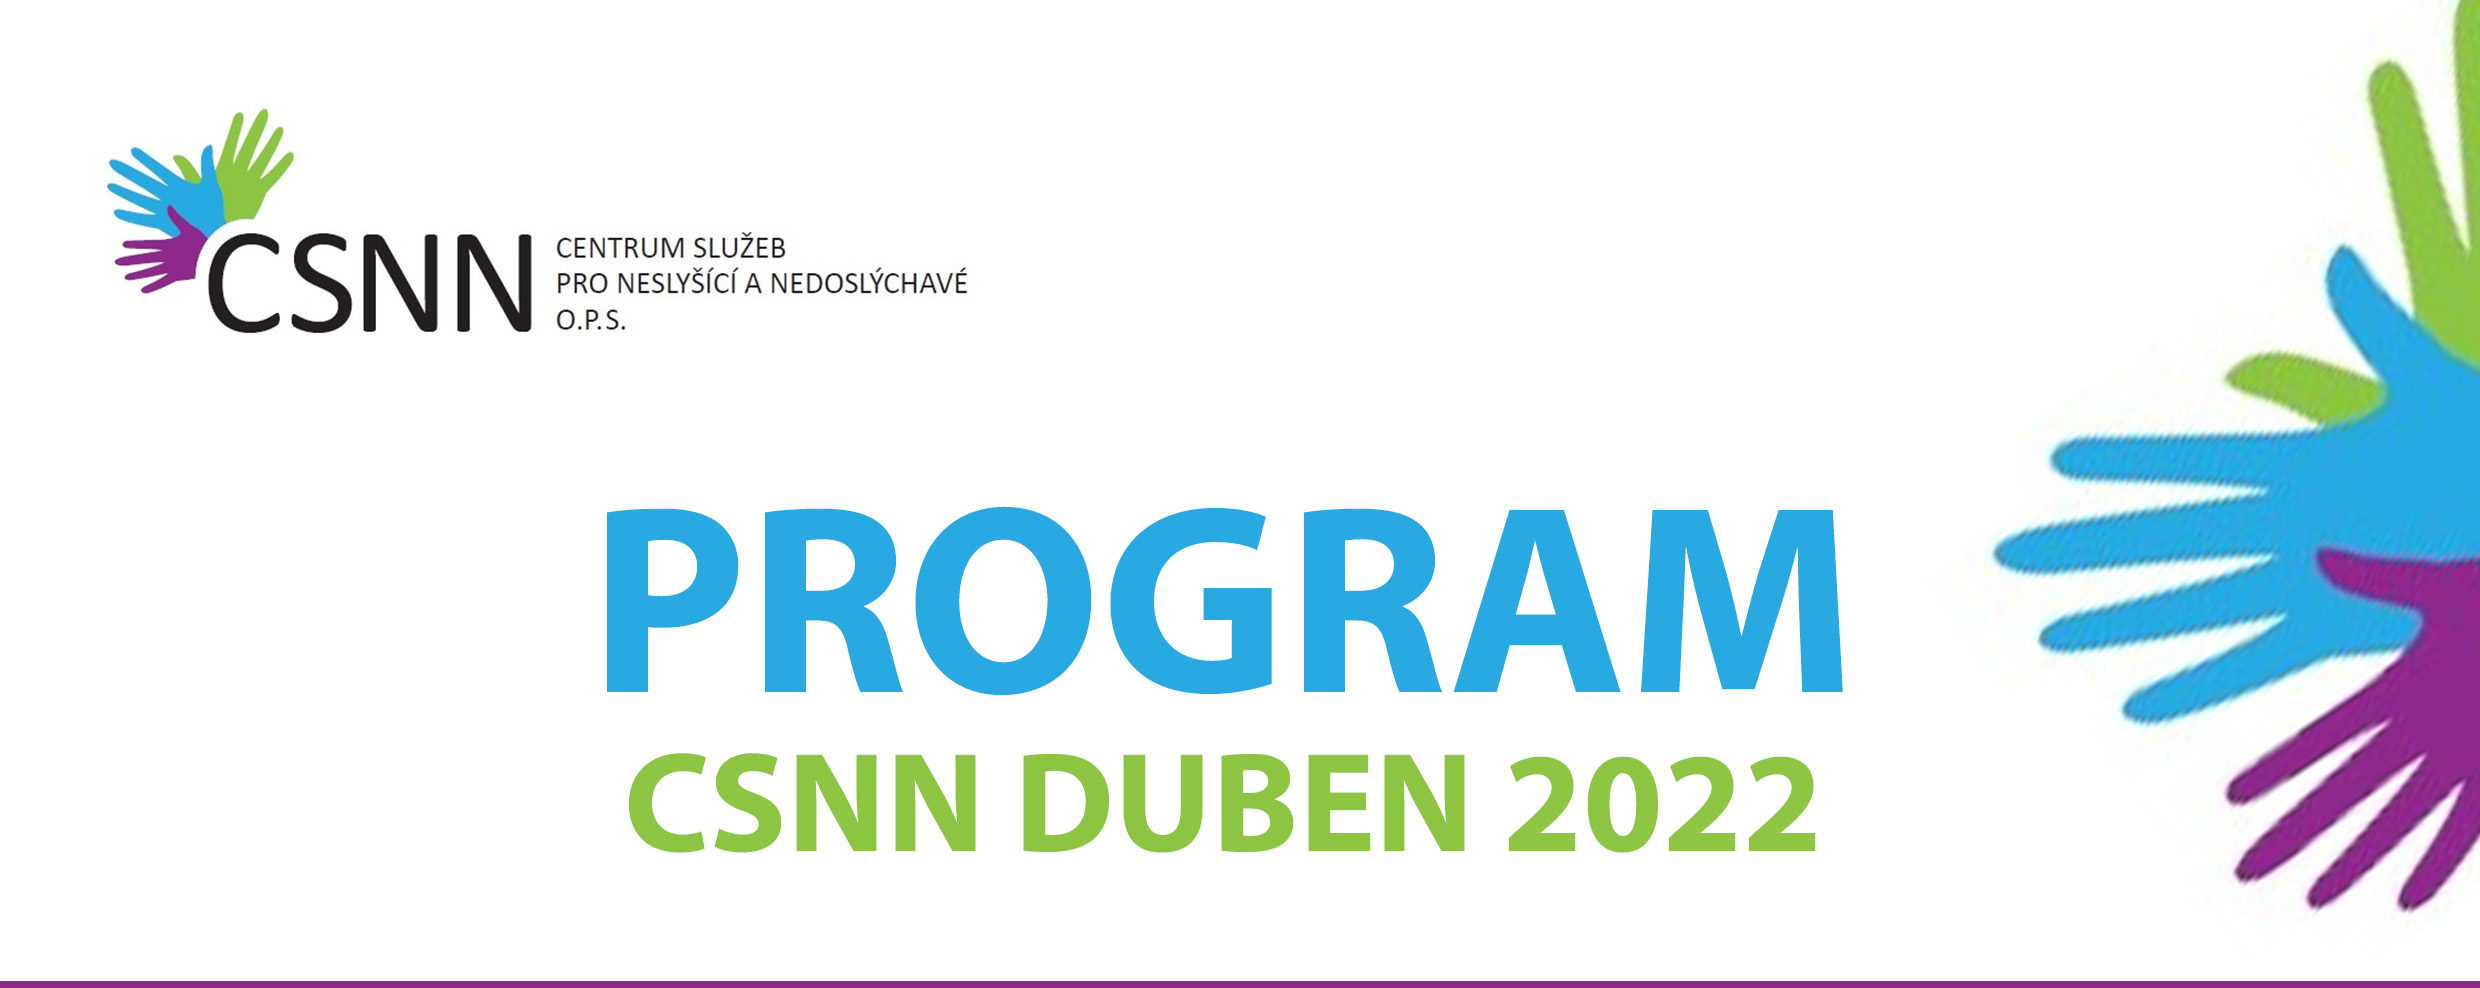 Program CSNN na duben 2022